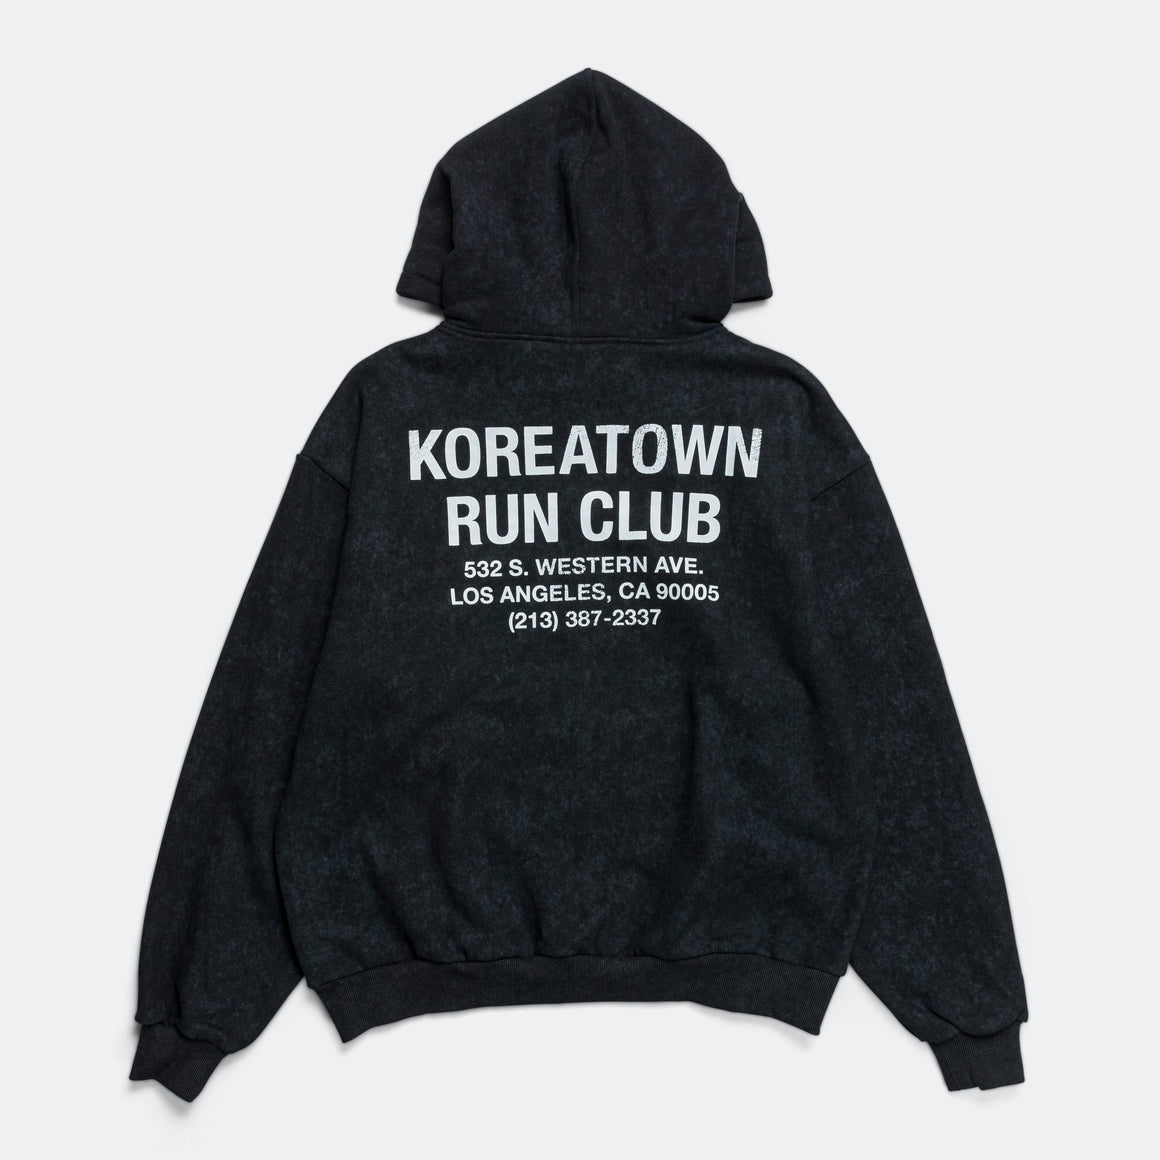 Koreatown Run Club - KRC Classic Hoodie - Black - Up There Athletics